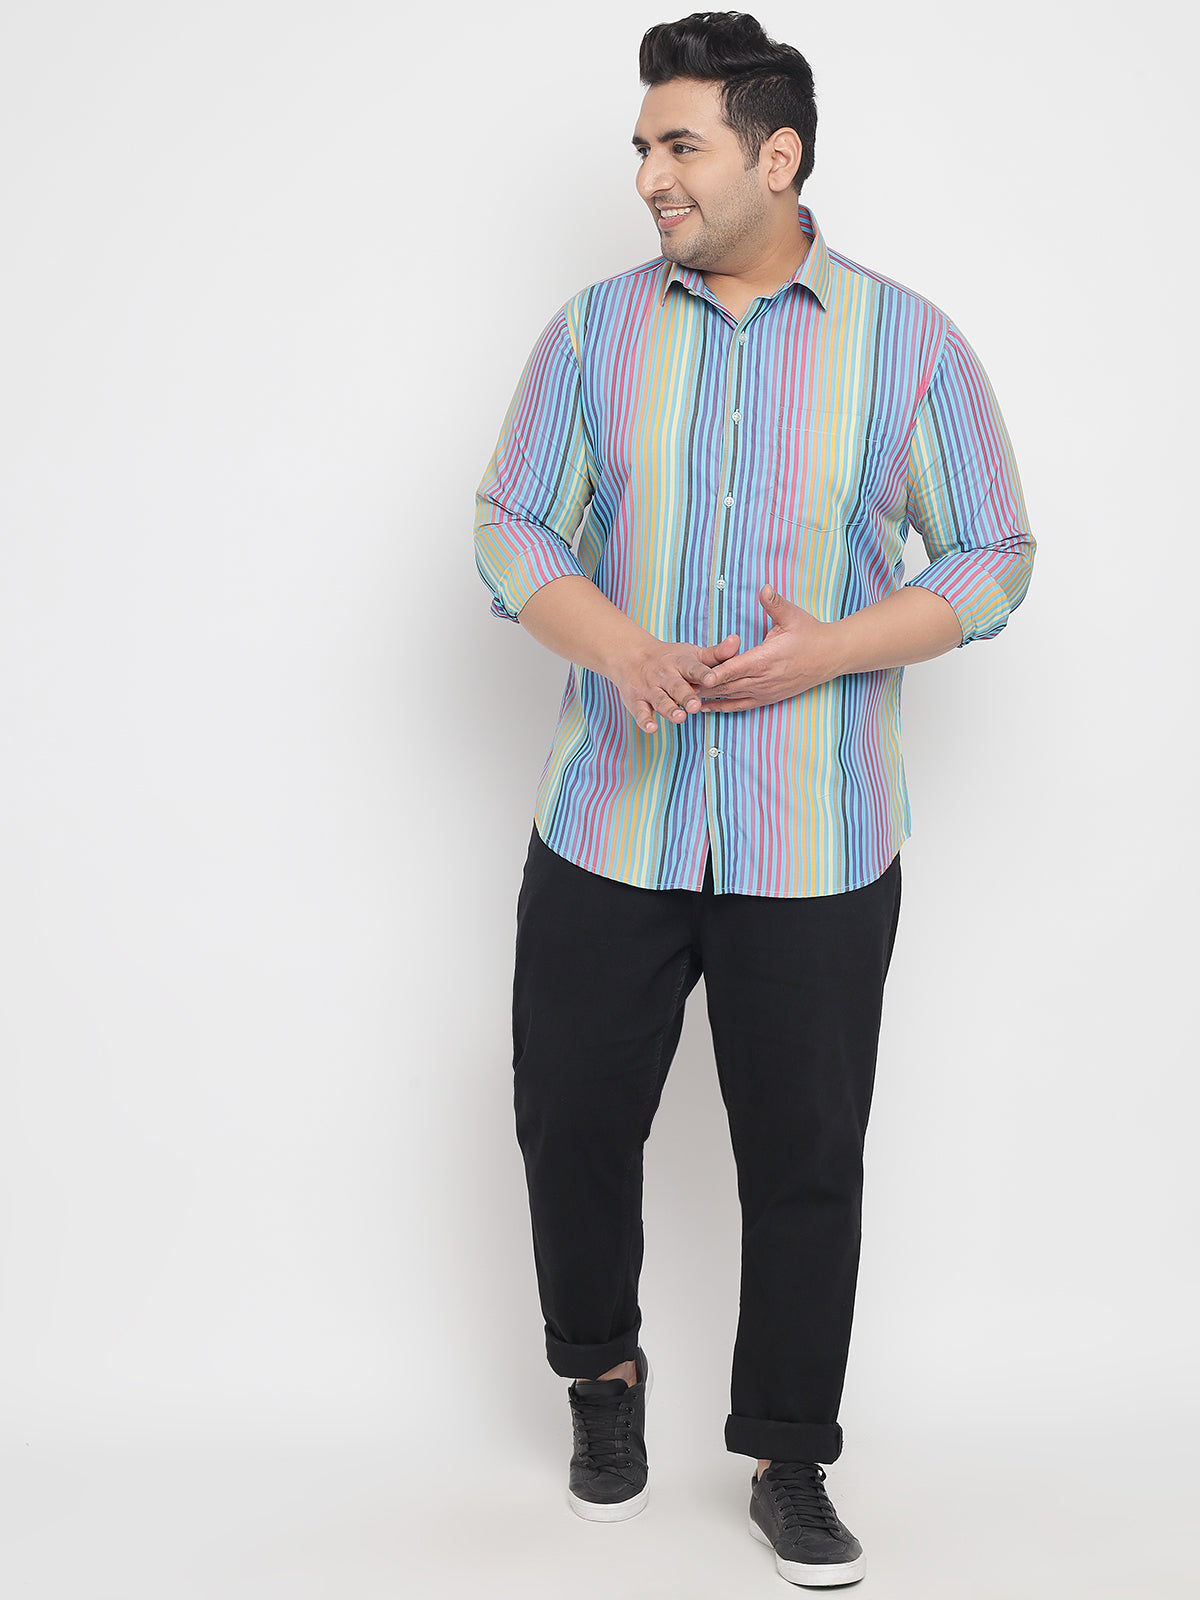 Rainbow Coloured Stripe Shirt For Men Plus